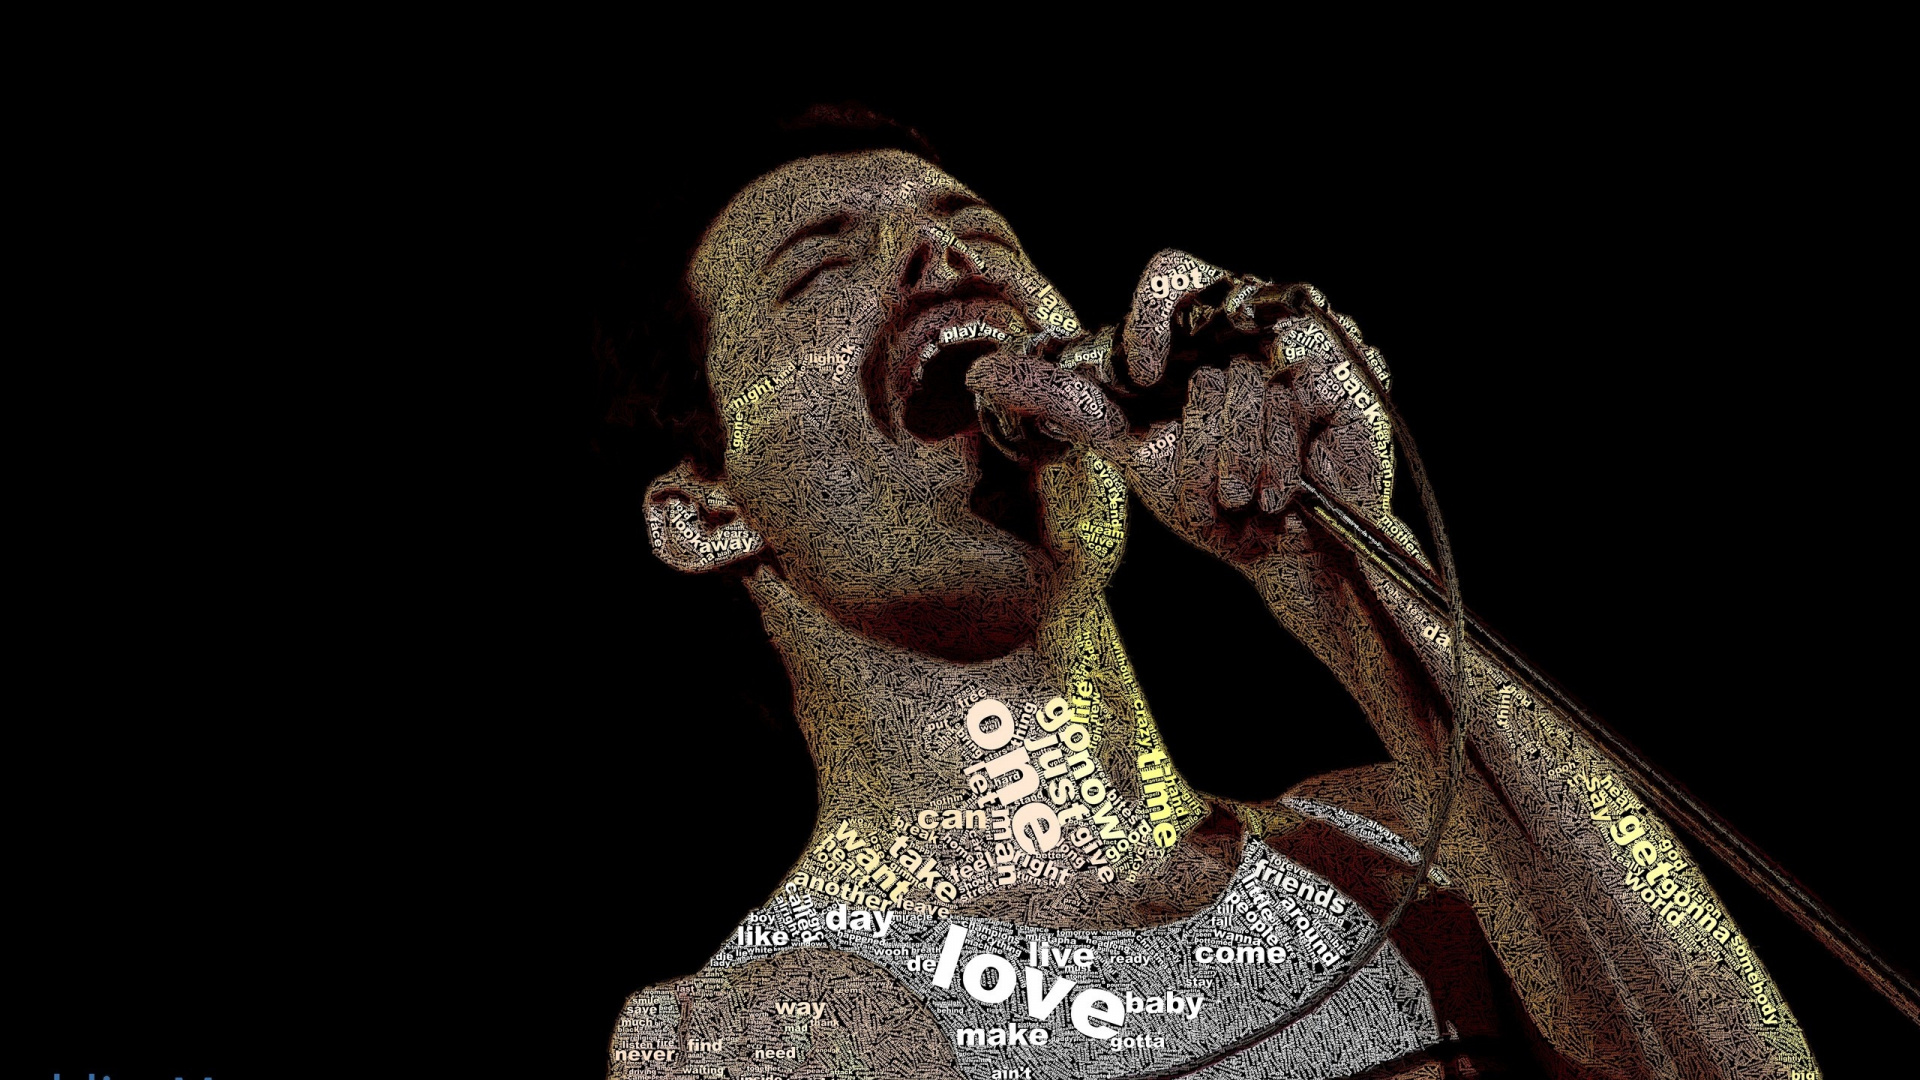 Freddie Mercury, Queen, Statue, Metall, Singer-songwriter. Wallpaper in 1920x1080 Resolution